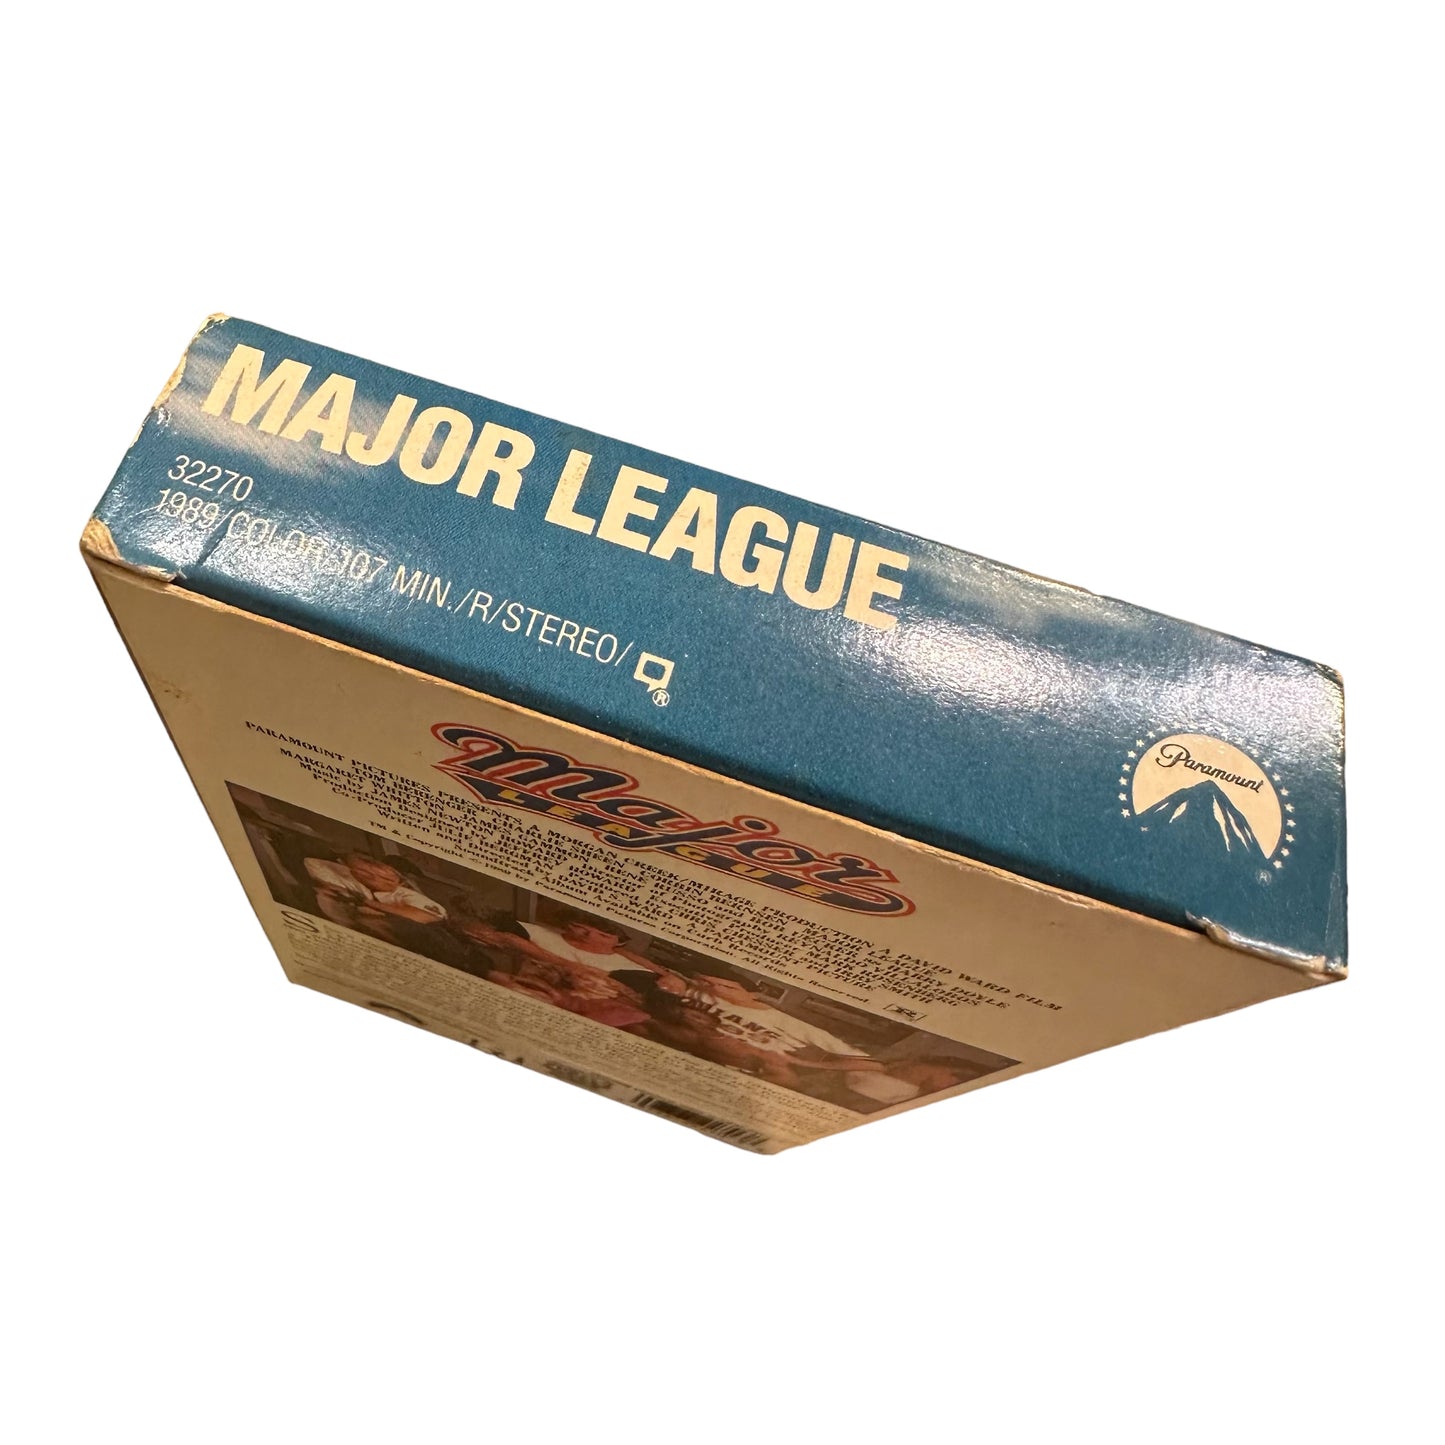 VHS ビデオテープ 輸入版 メジャーリーグ Major League 海外版 USA アメリカ ヴィンテージ ビデオ 紙ジャケ